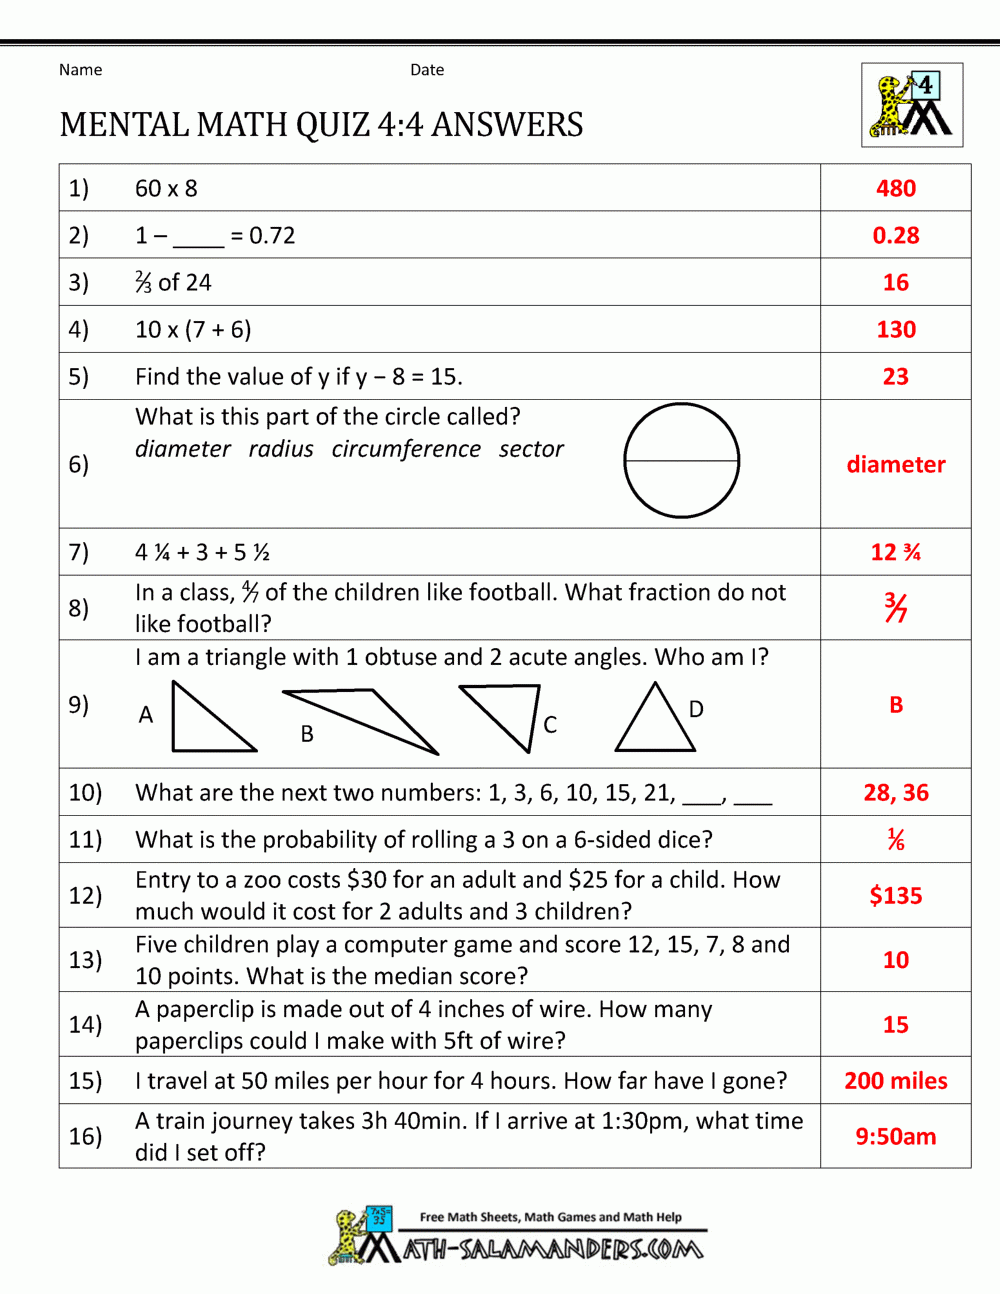 mental-math-4th-grade-math-worksheet-answers